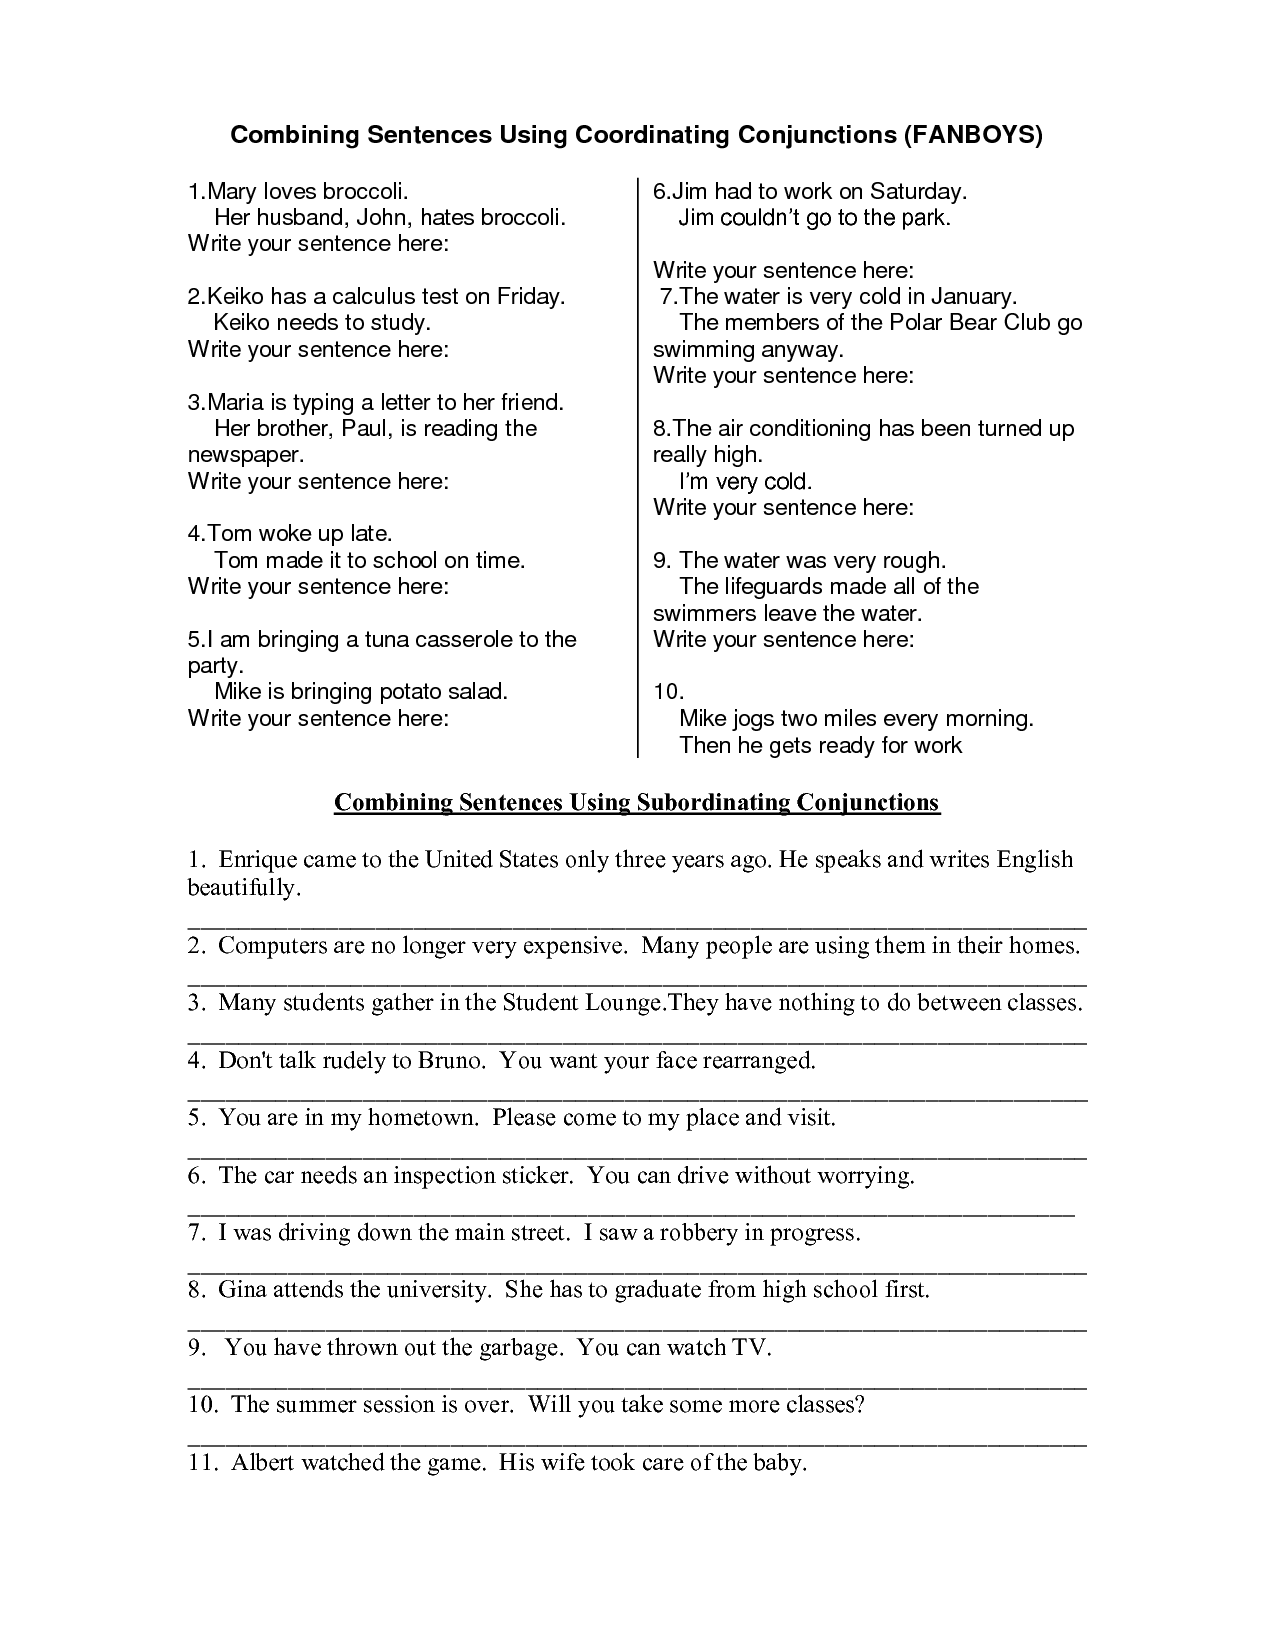 Combining Sentences Using Conjunctions Worksheet Image